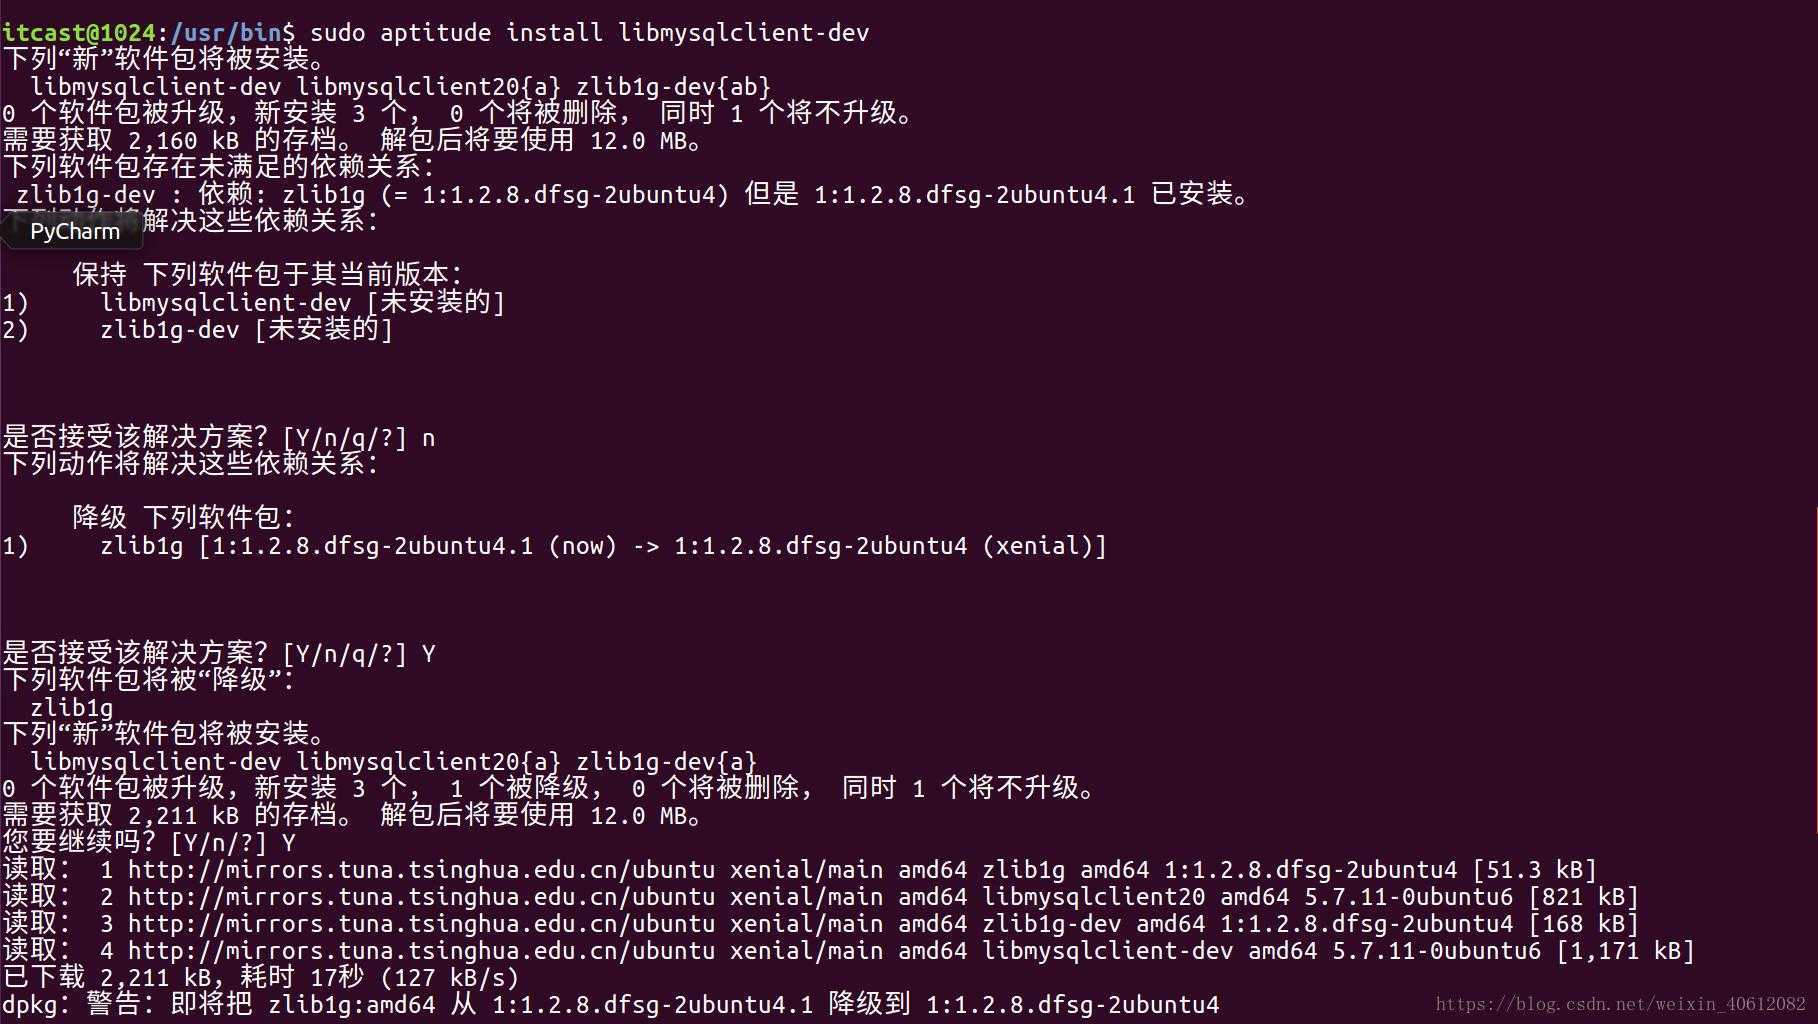 Fixing “command ‘python’ not found” error in ubuntu linux